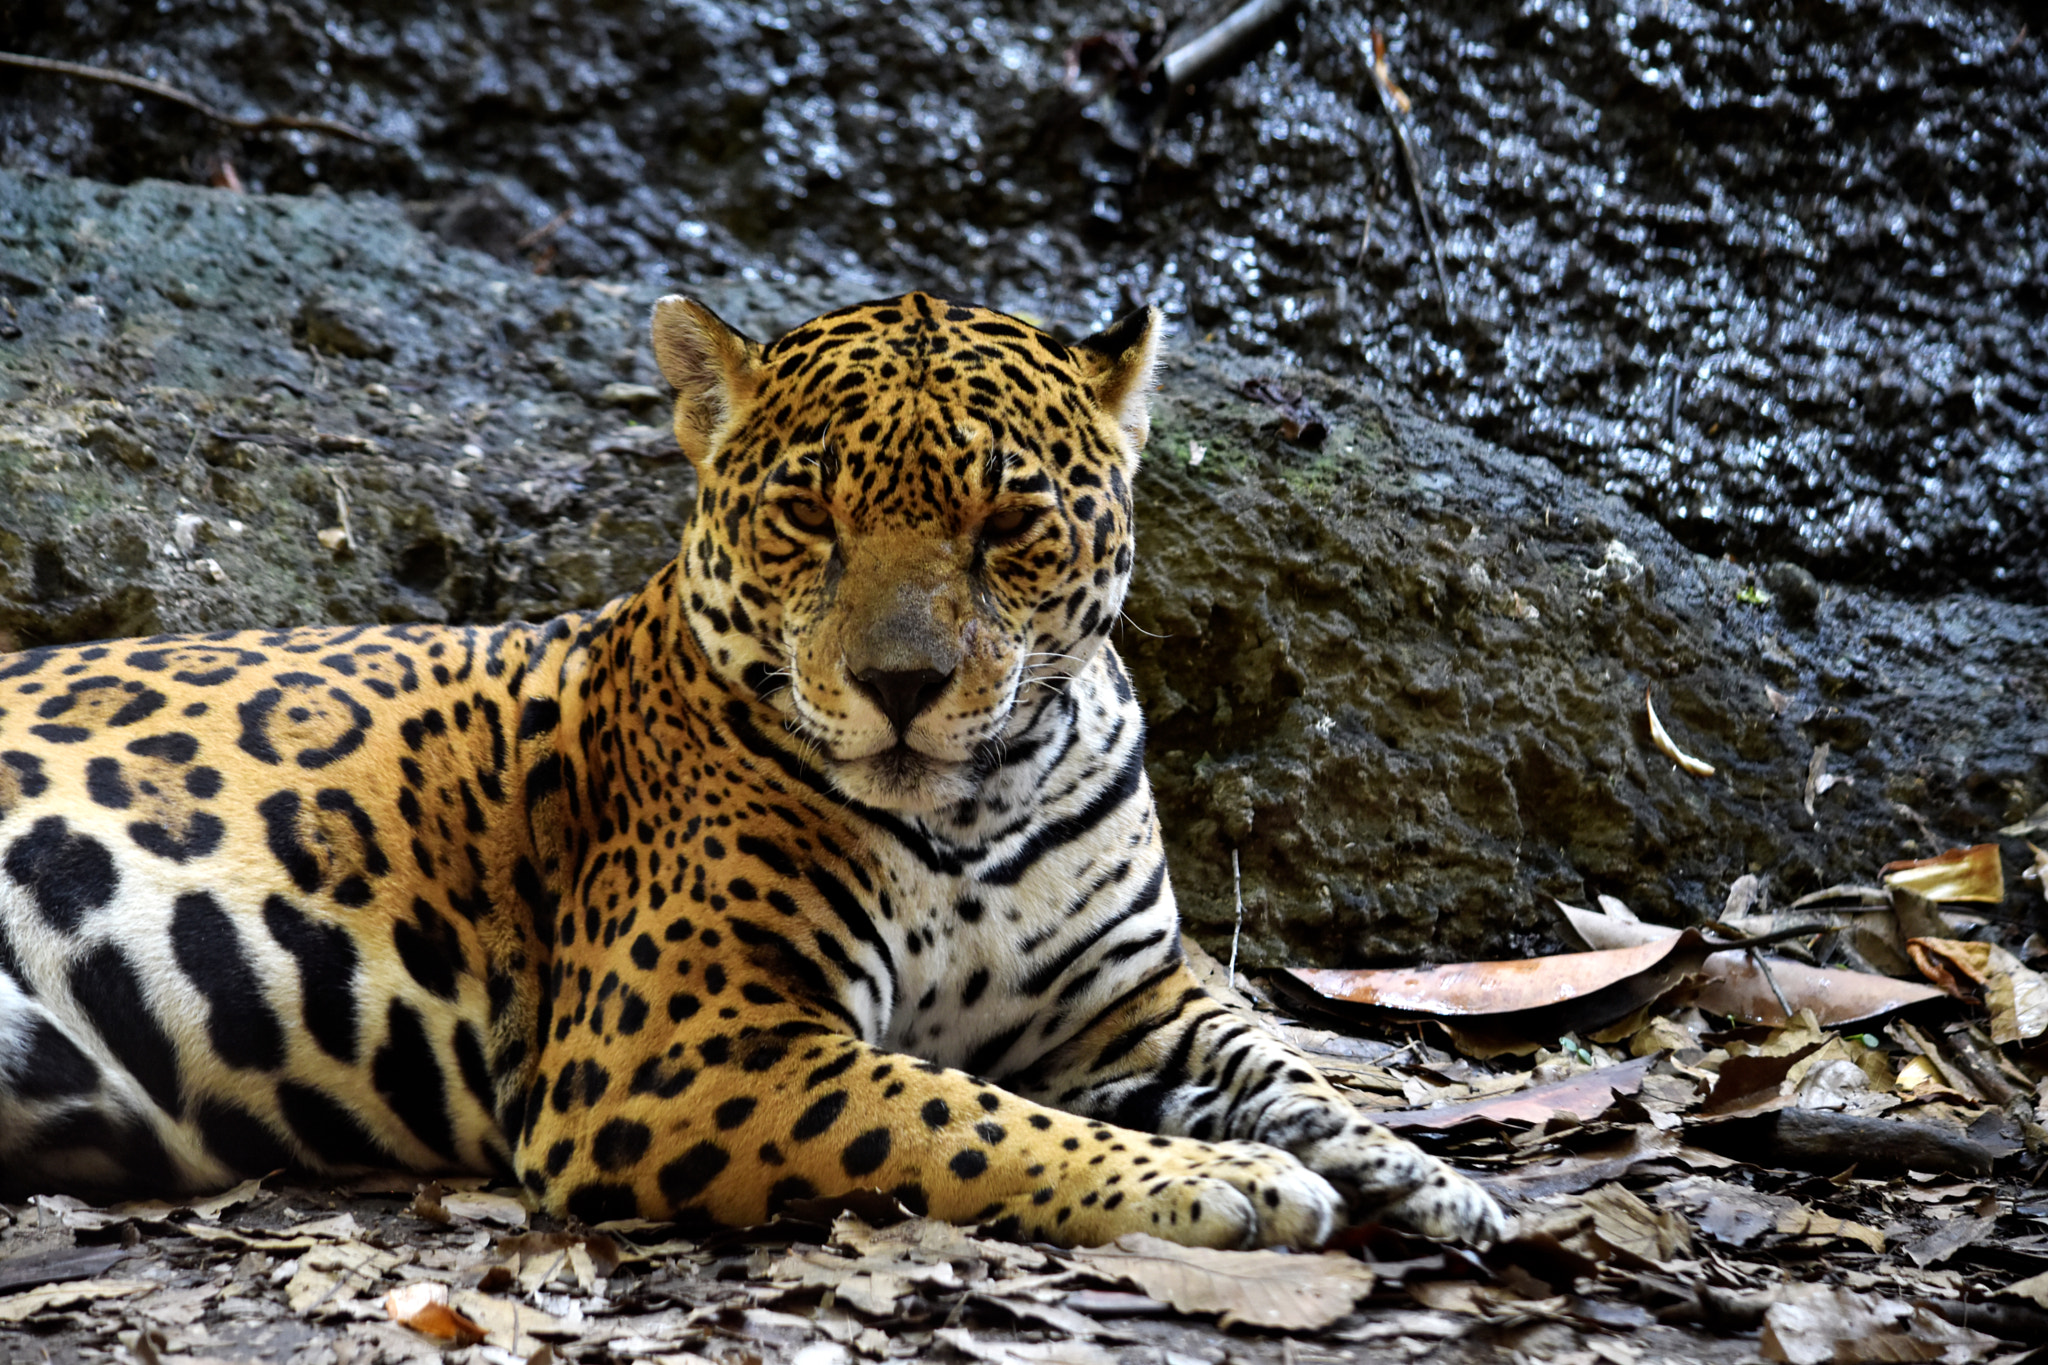 File:Jaguar (155349039).jpeg - Wikimedia Commons